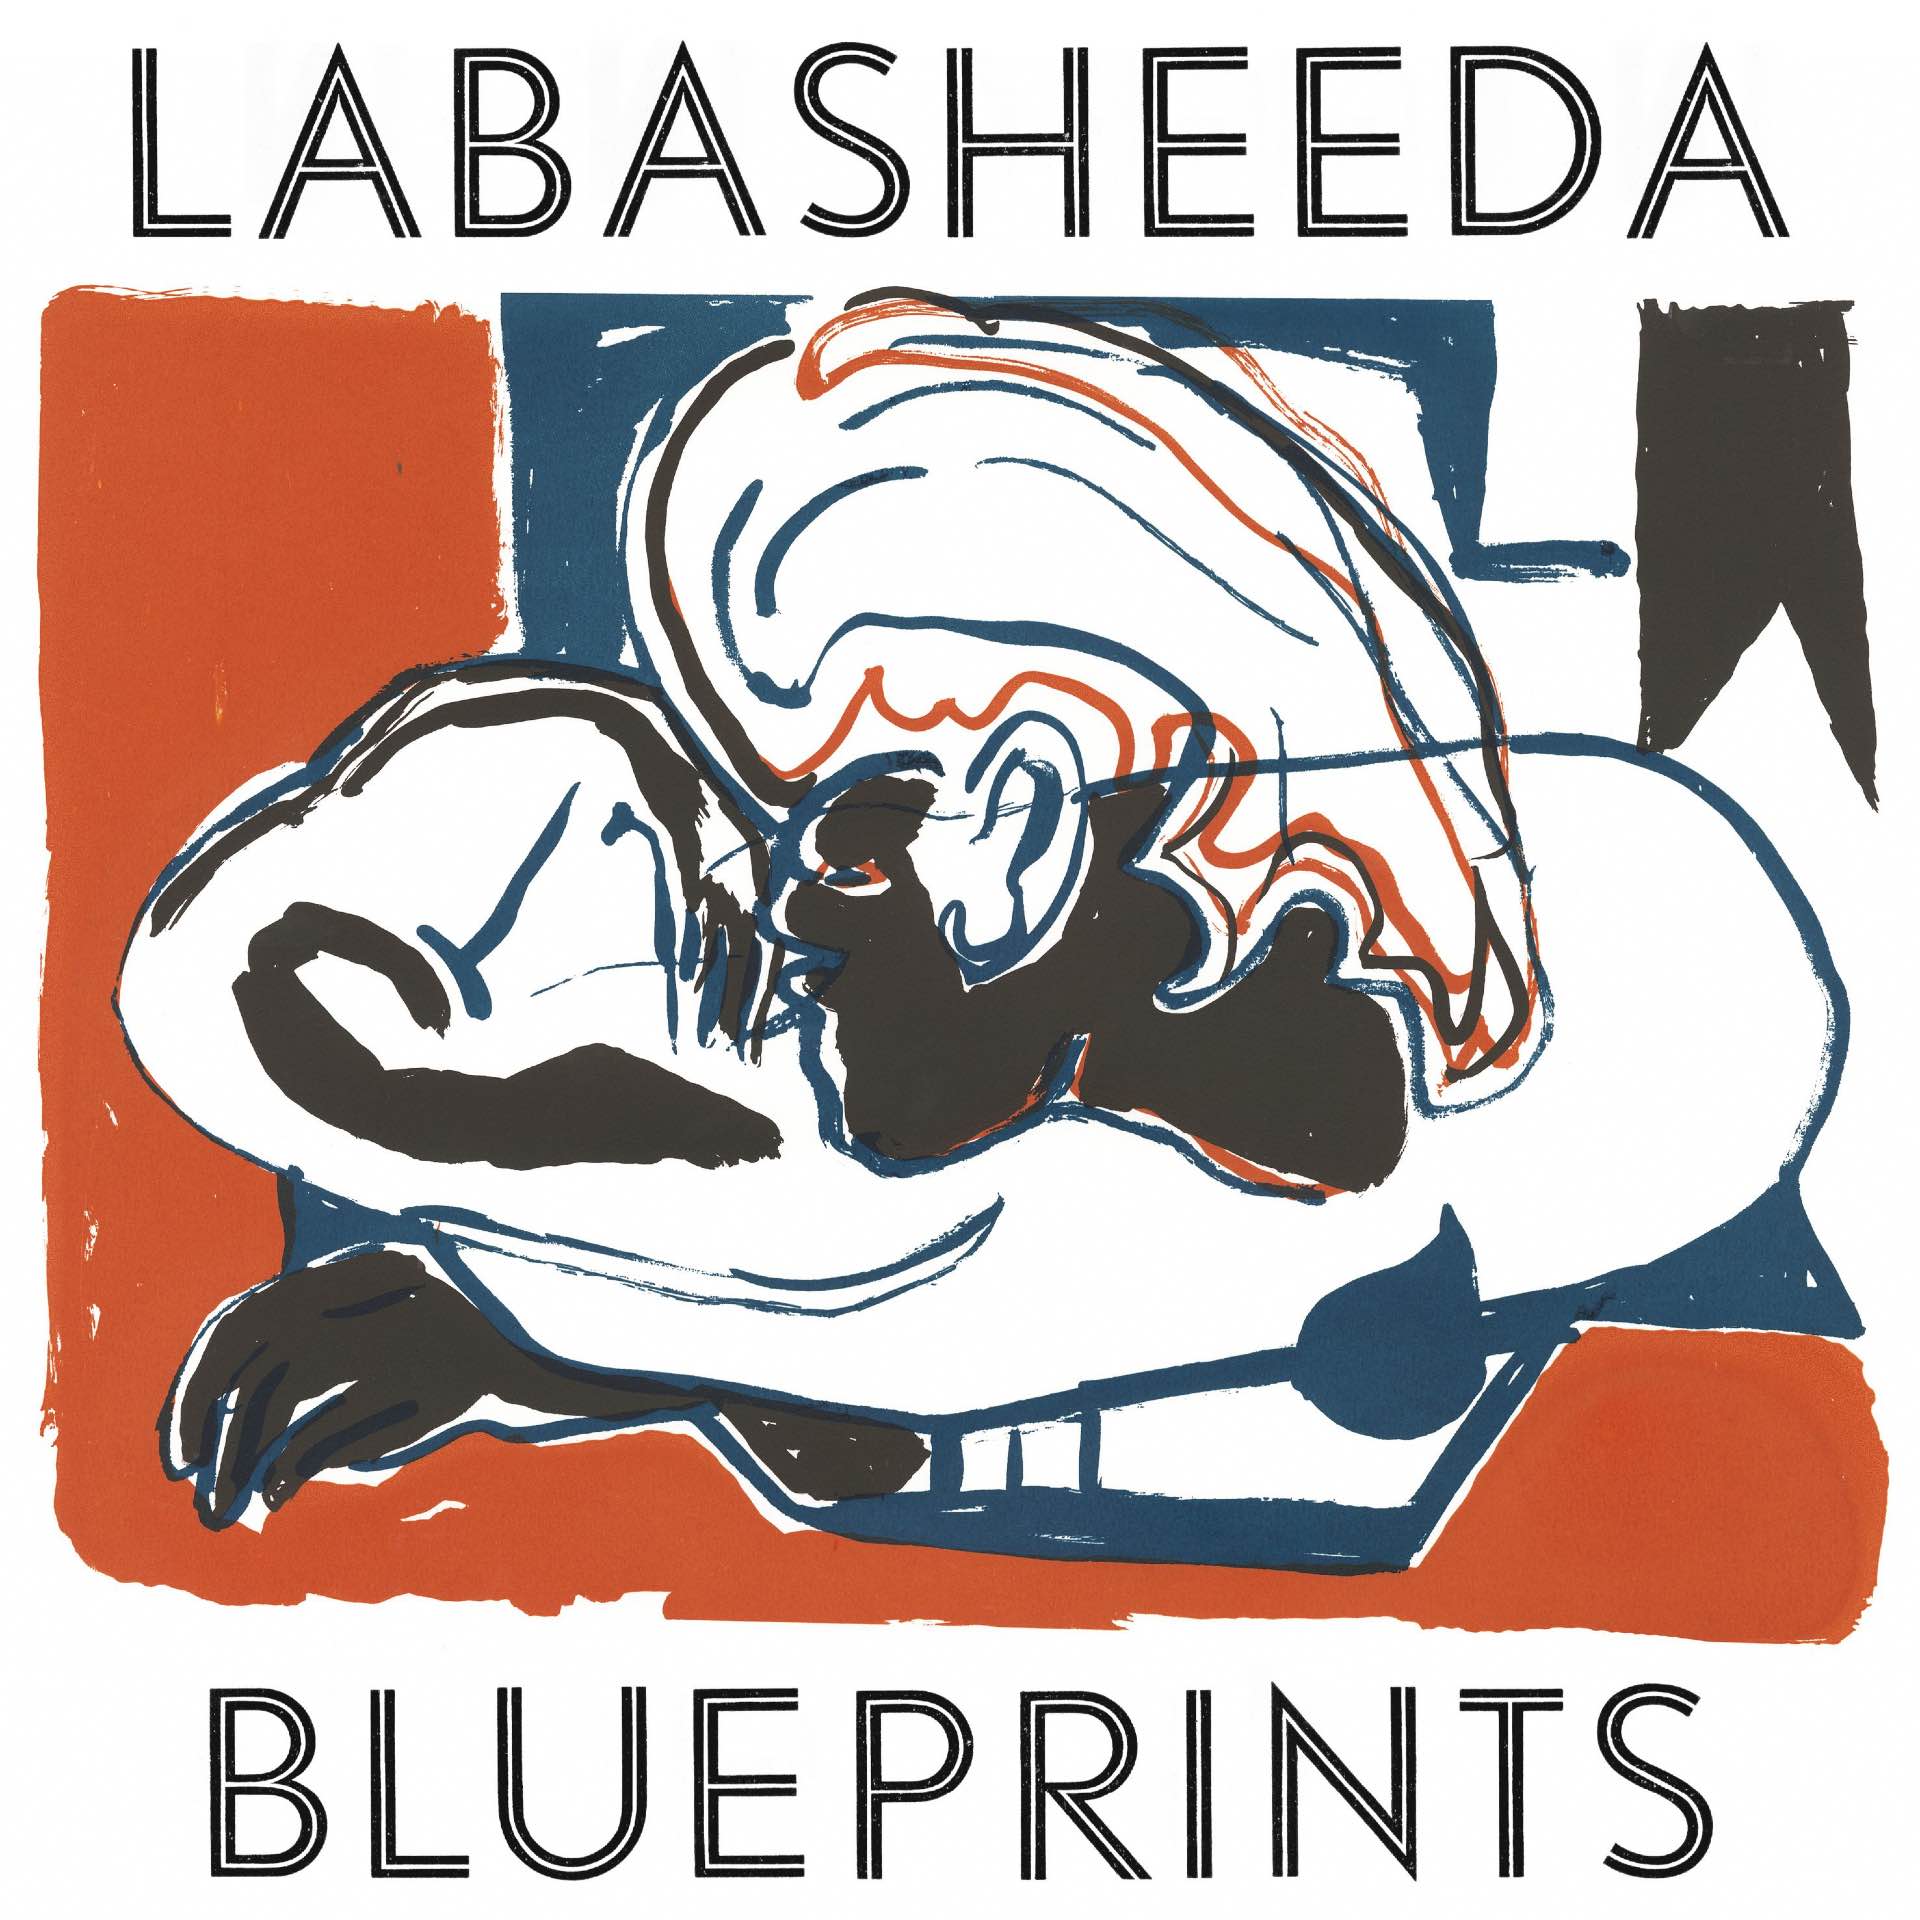 Labasheeda-blueprints-tour